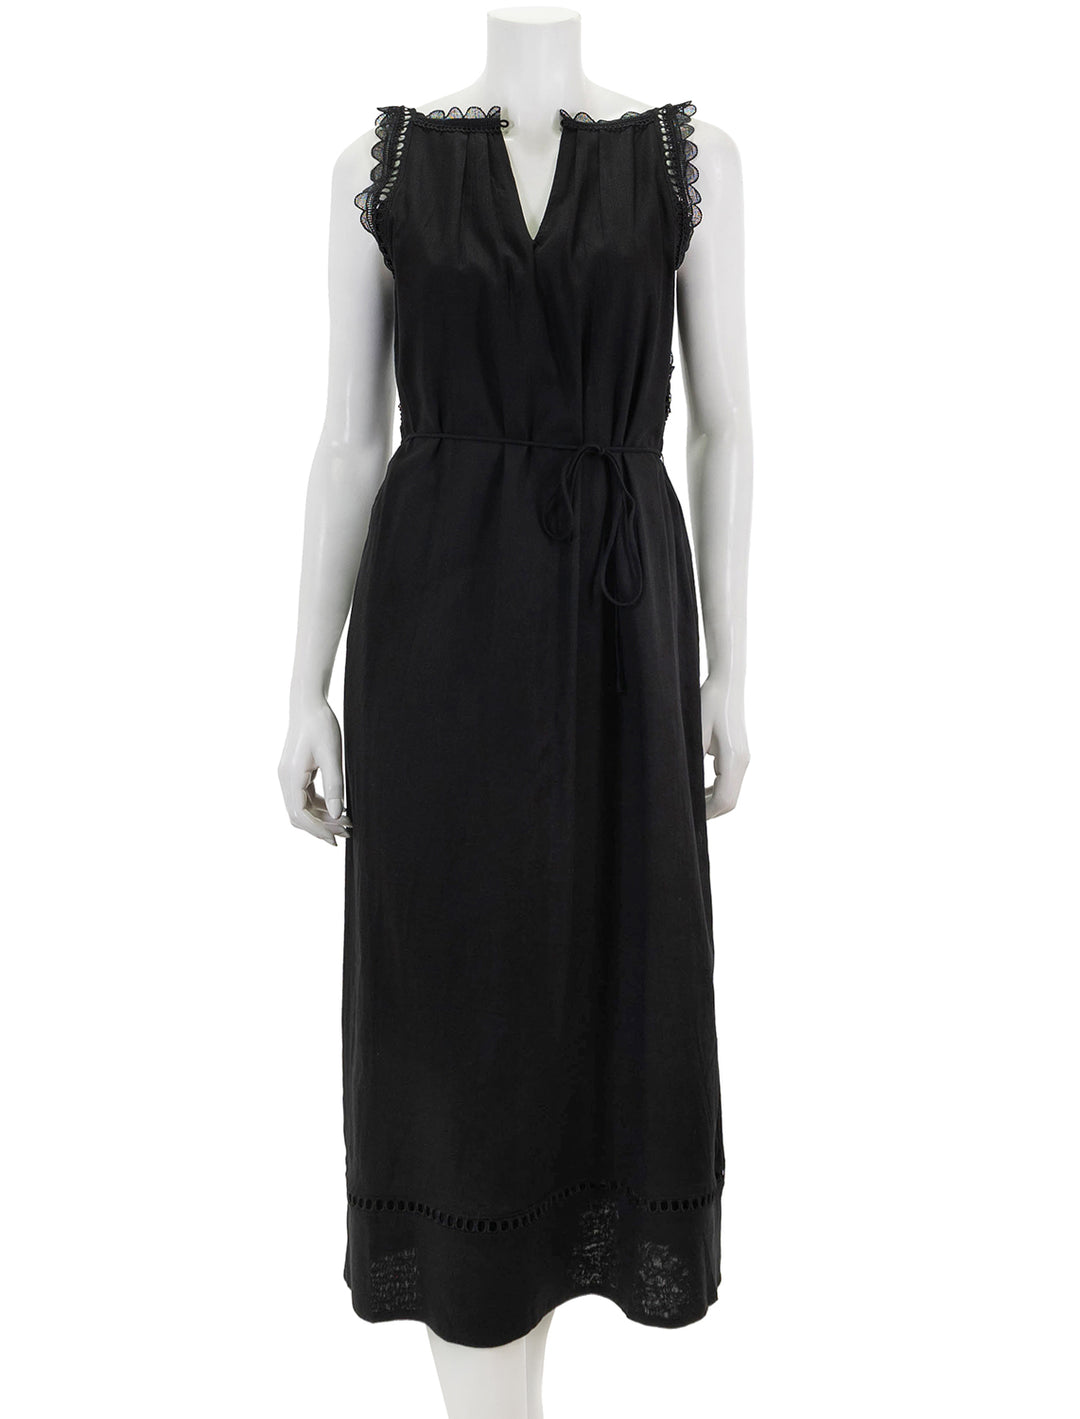 Front view of Suncoo Paris' Cristy V-Neck Dress in Noir.